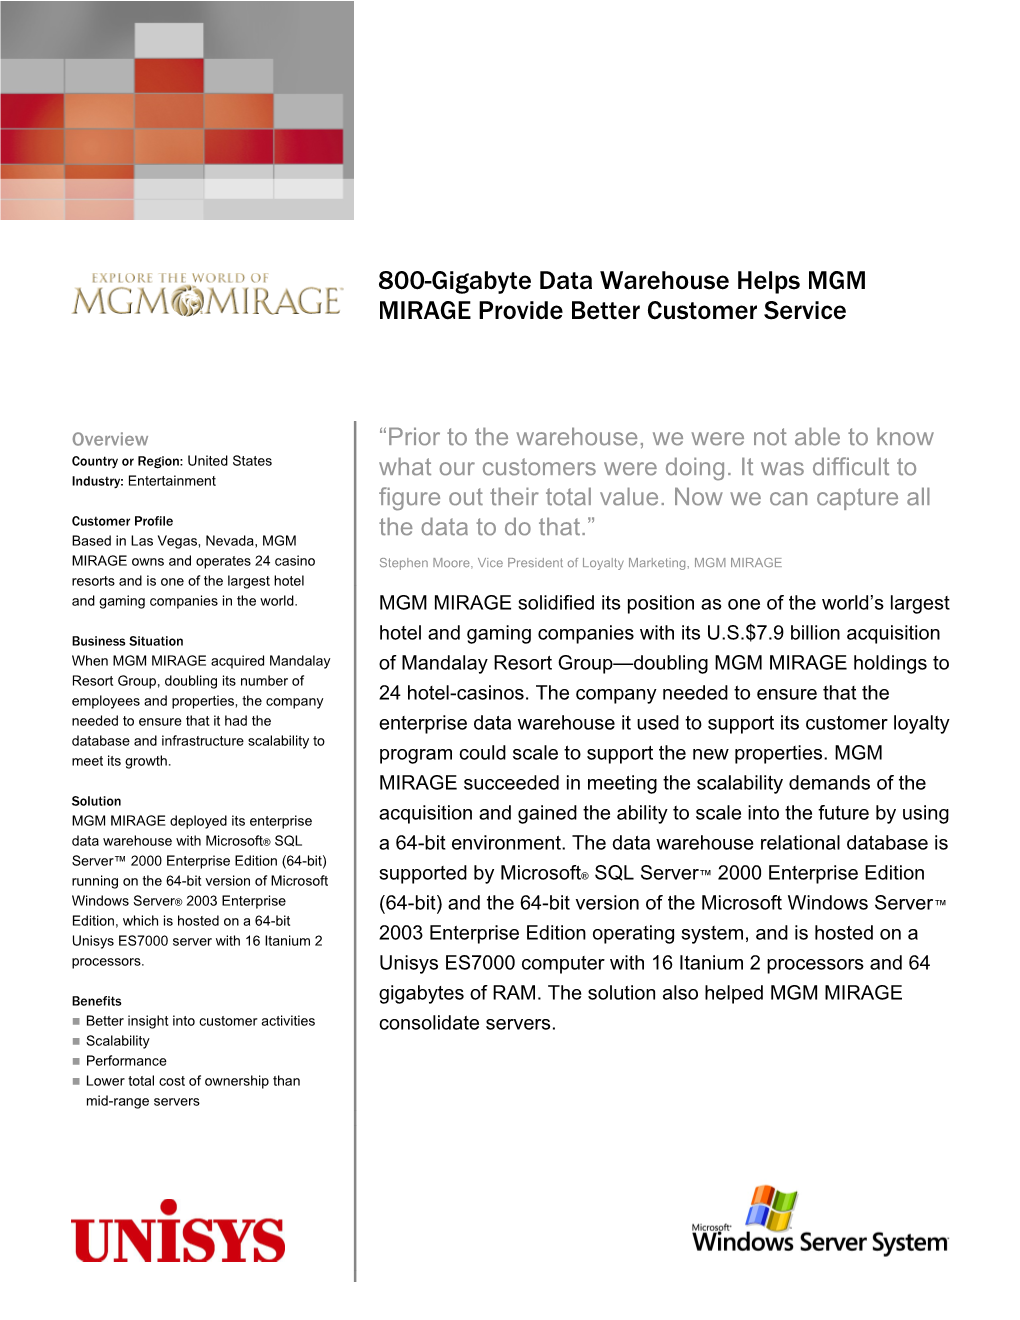 800-Gigabyte Data Warehouse Helps MGM MIRAGE Provide Better Customer Service